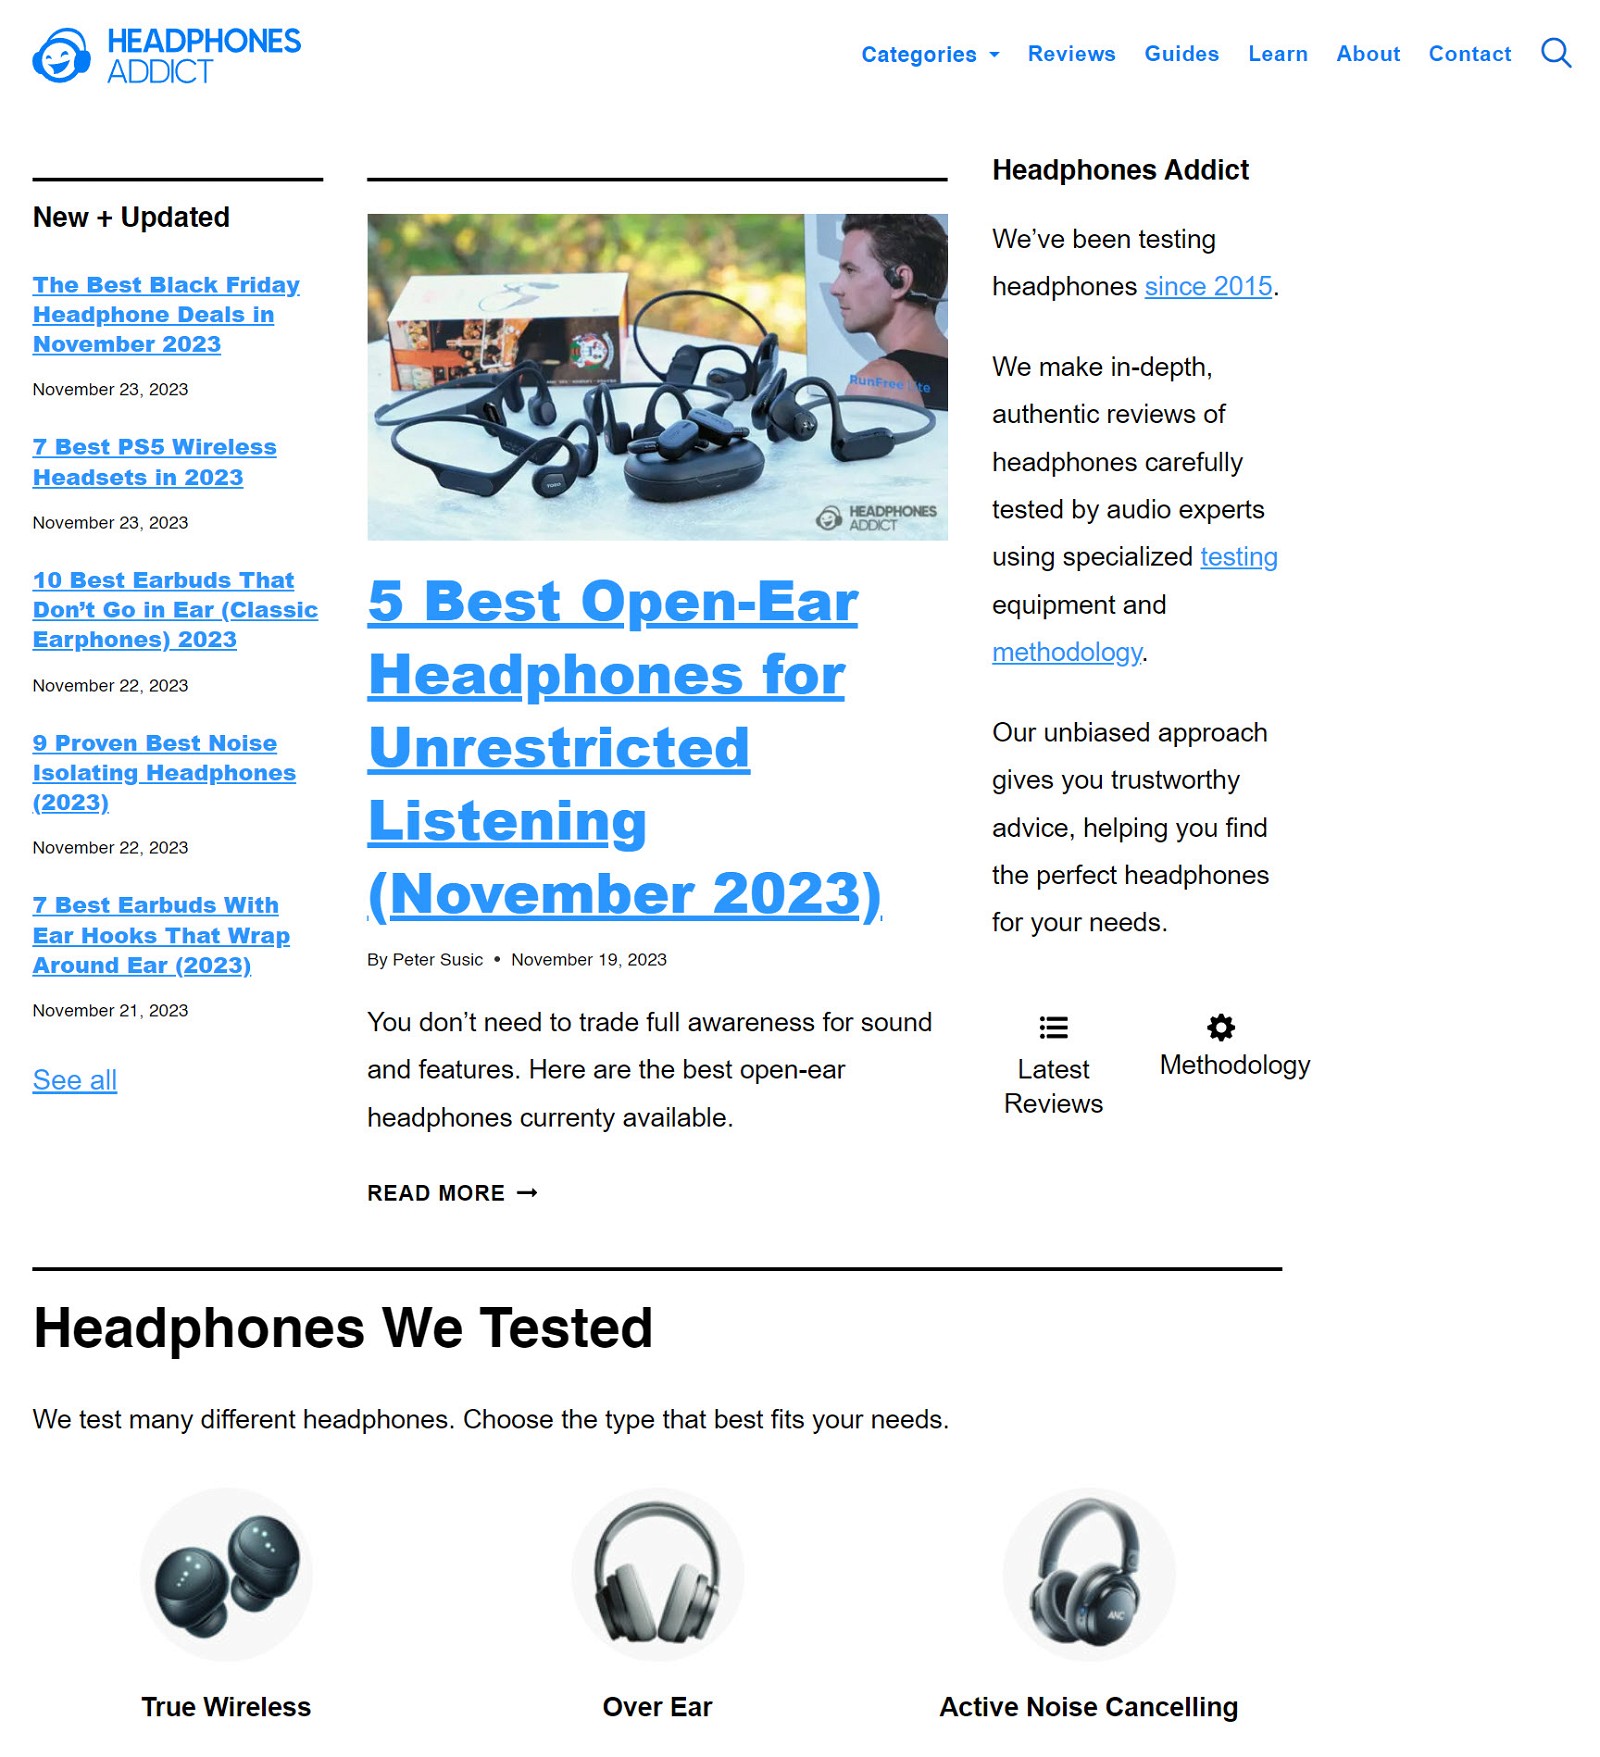 headphones addict homepage